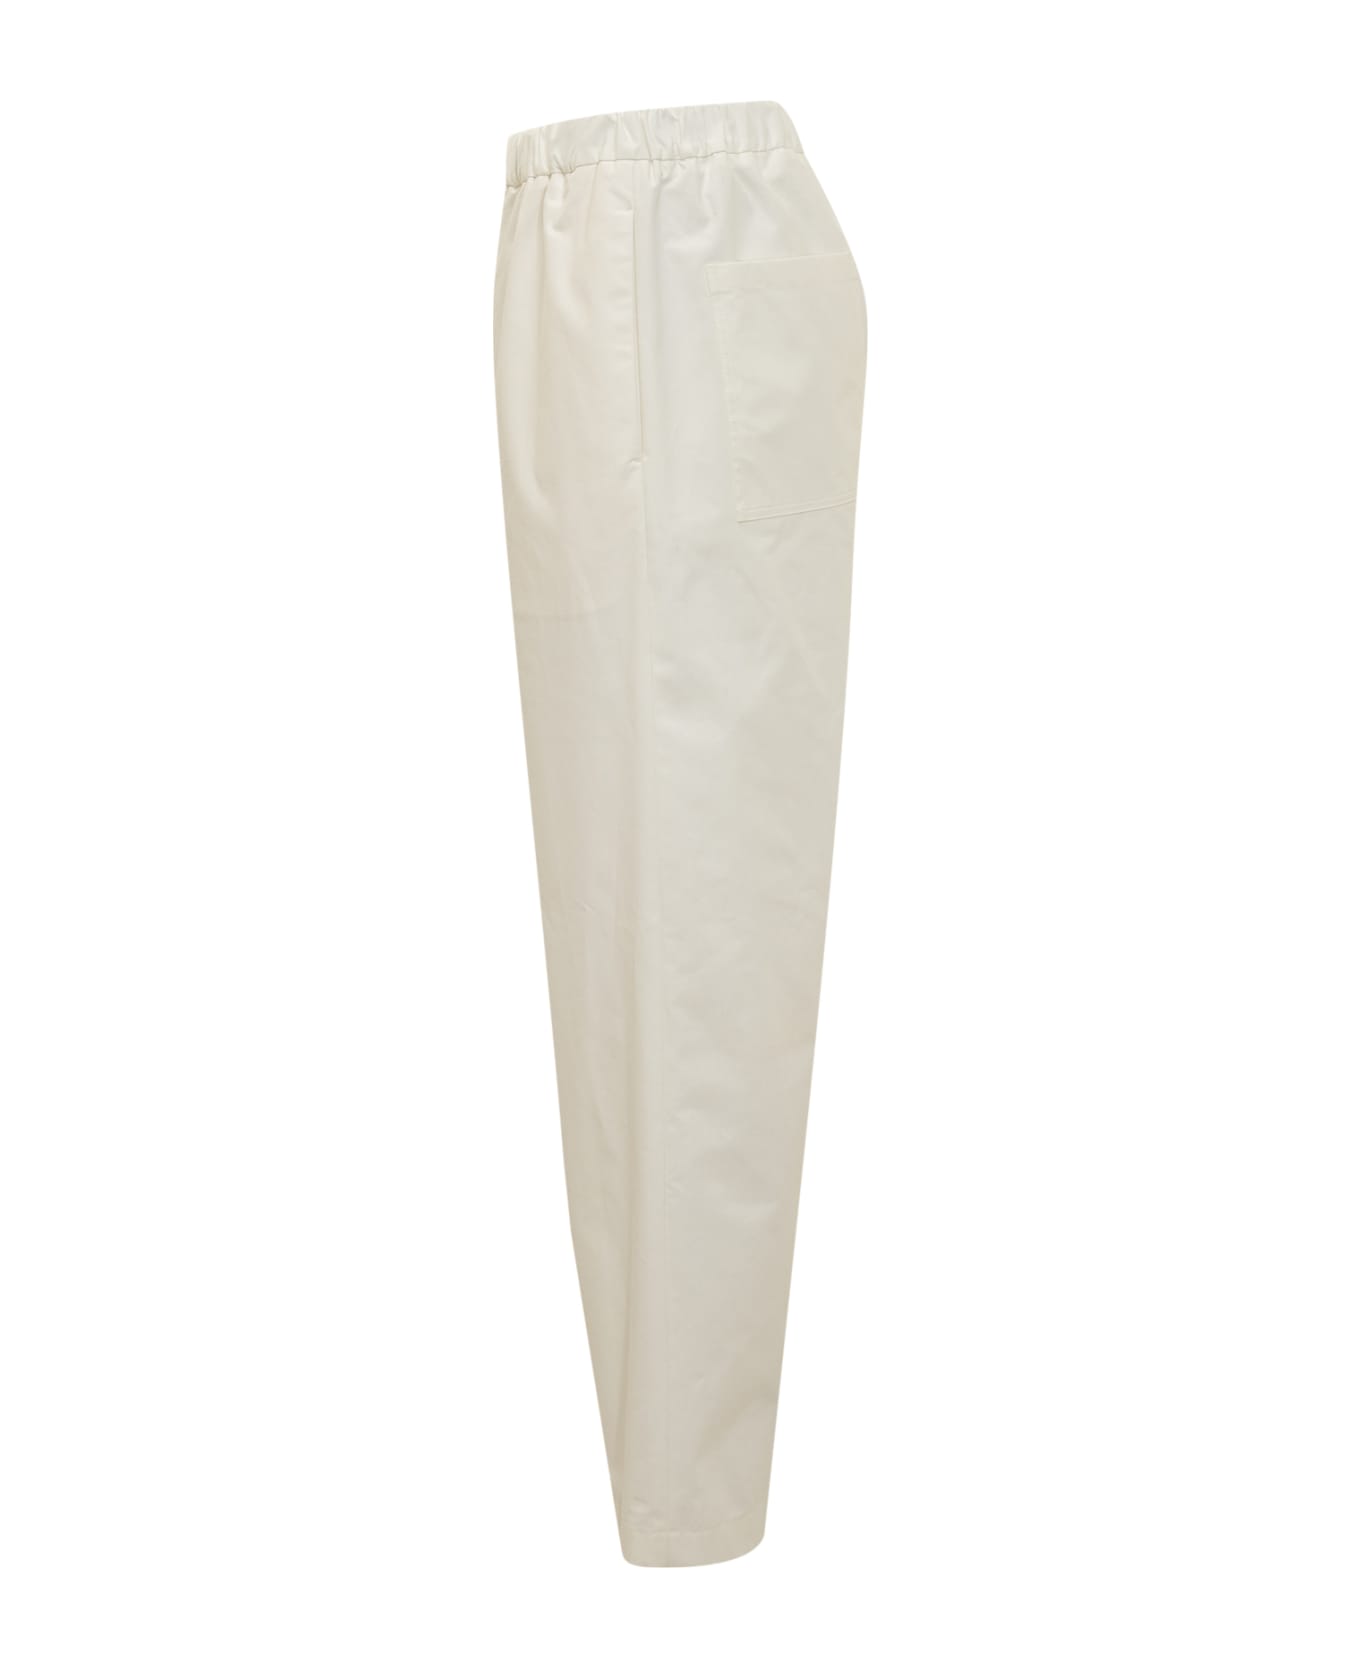 Jil Sander 13 Aw 18.5 Trousers - BEIGE ボトムス